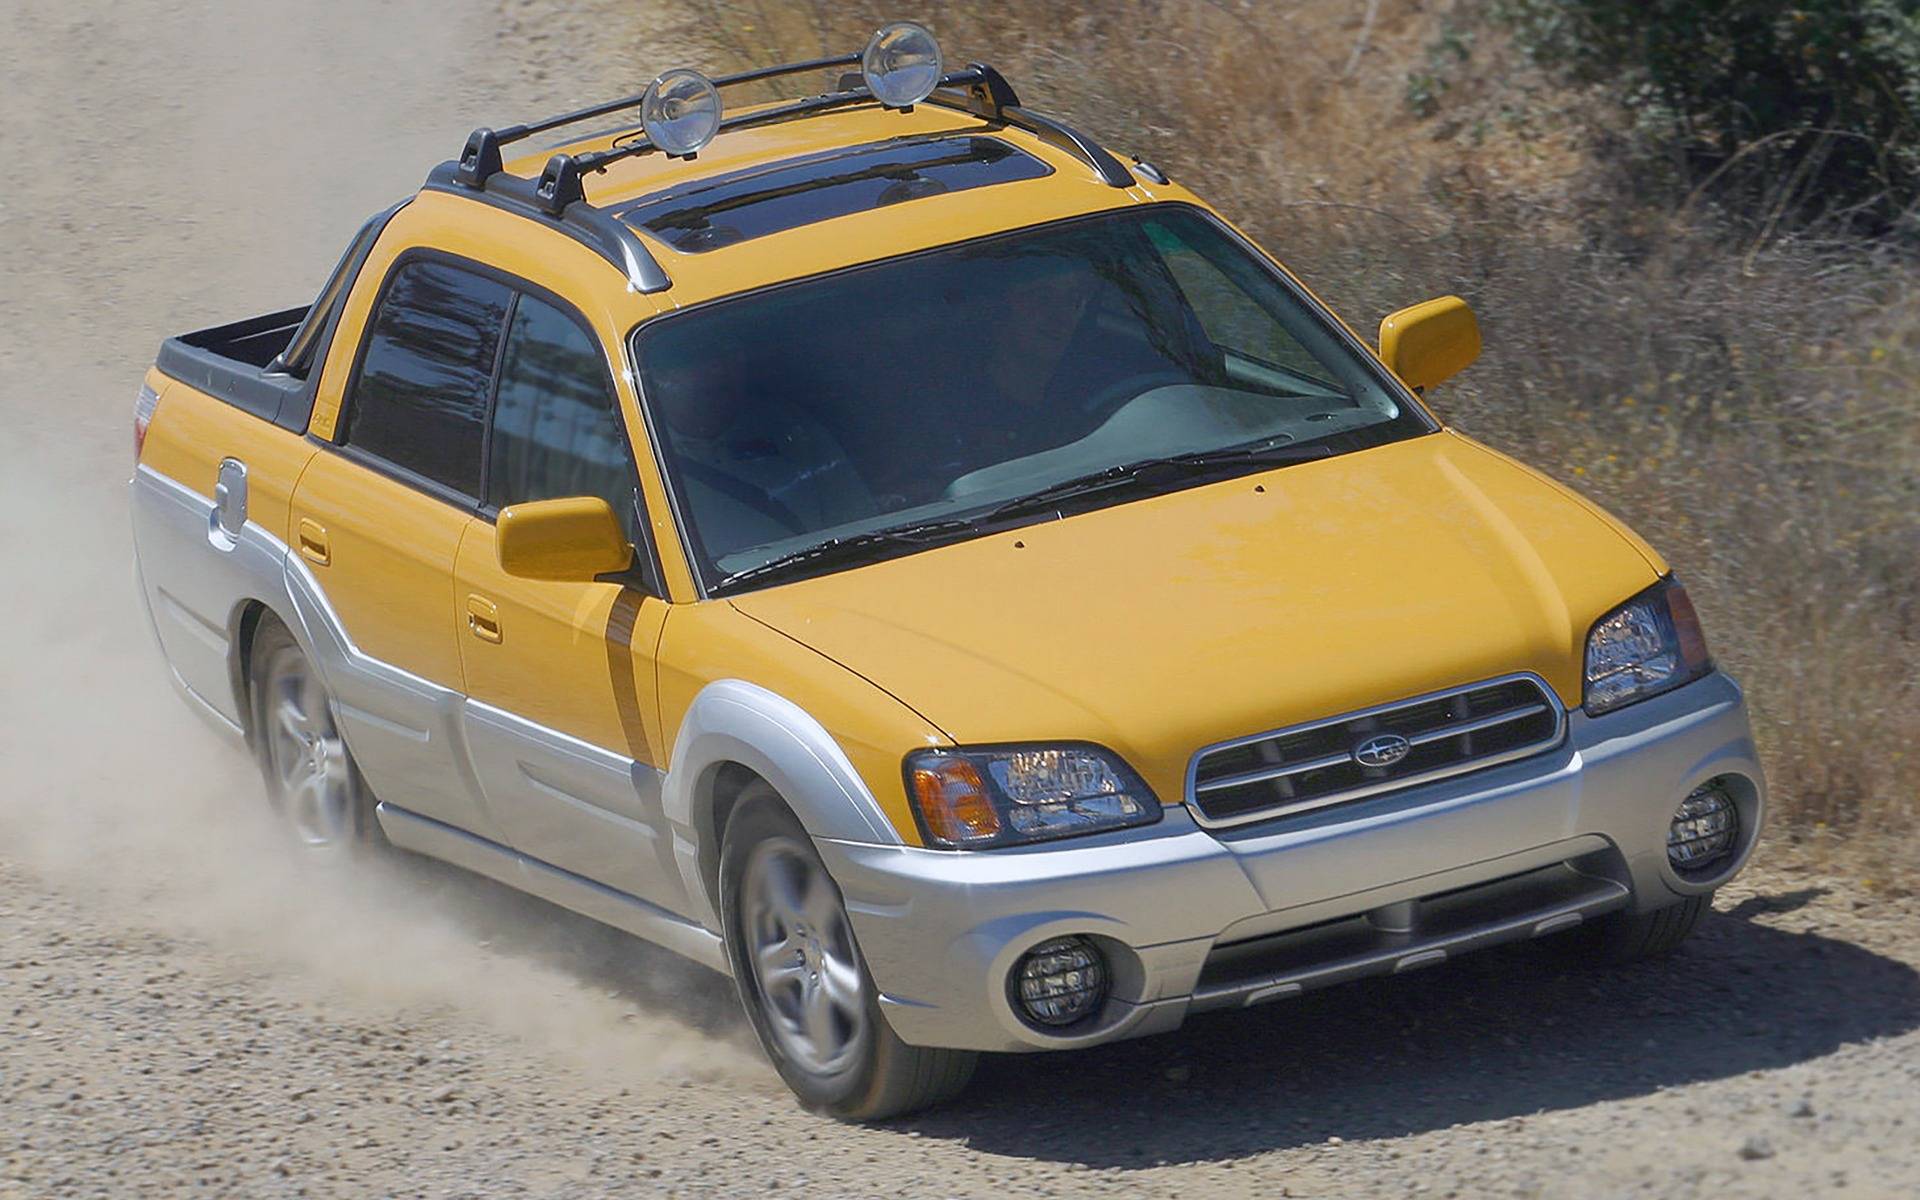 Subaru Baja camion jaune conduisant sur un chemin de terre